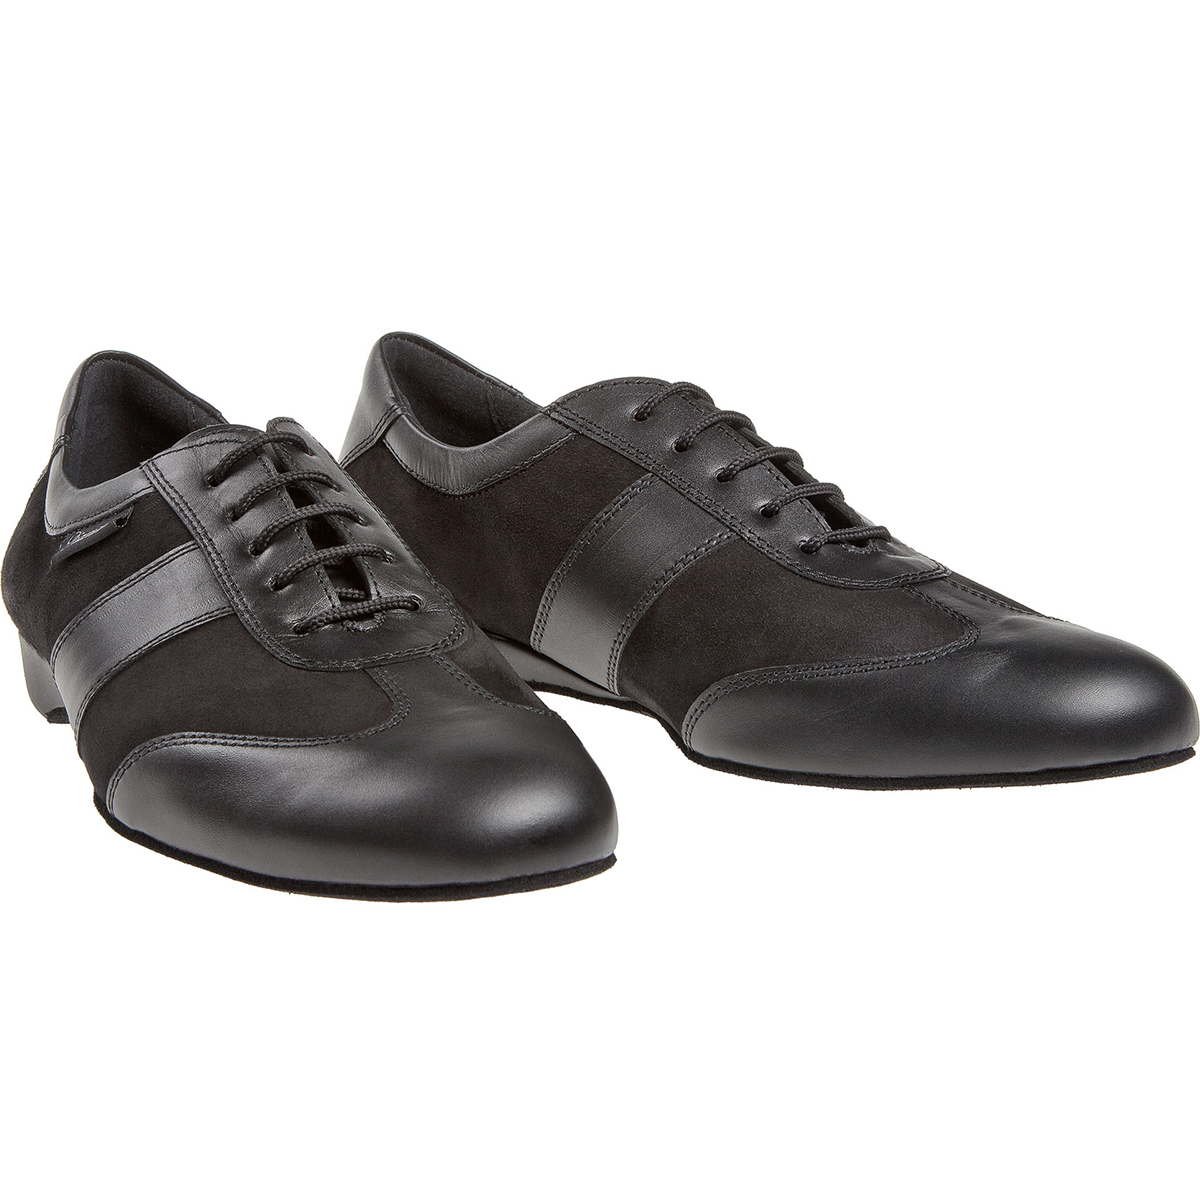 Wedge Heel Diamant Mens Model 123 Dance Sneaker- 1 11 W US 10.5 UK 123-225-070 2.5 cm Wide - H Width